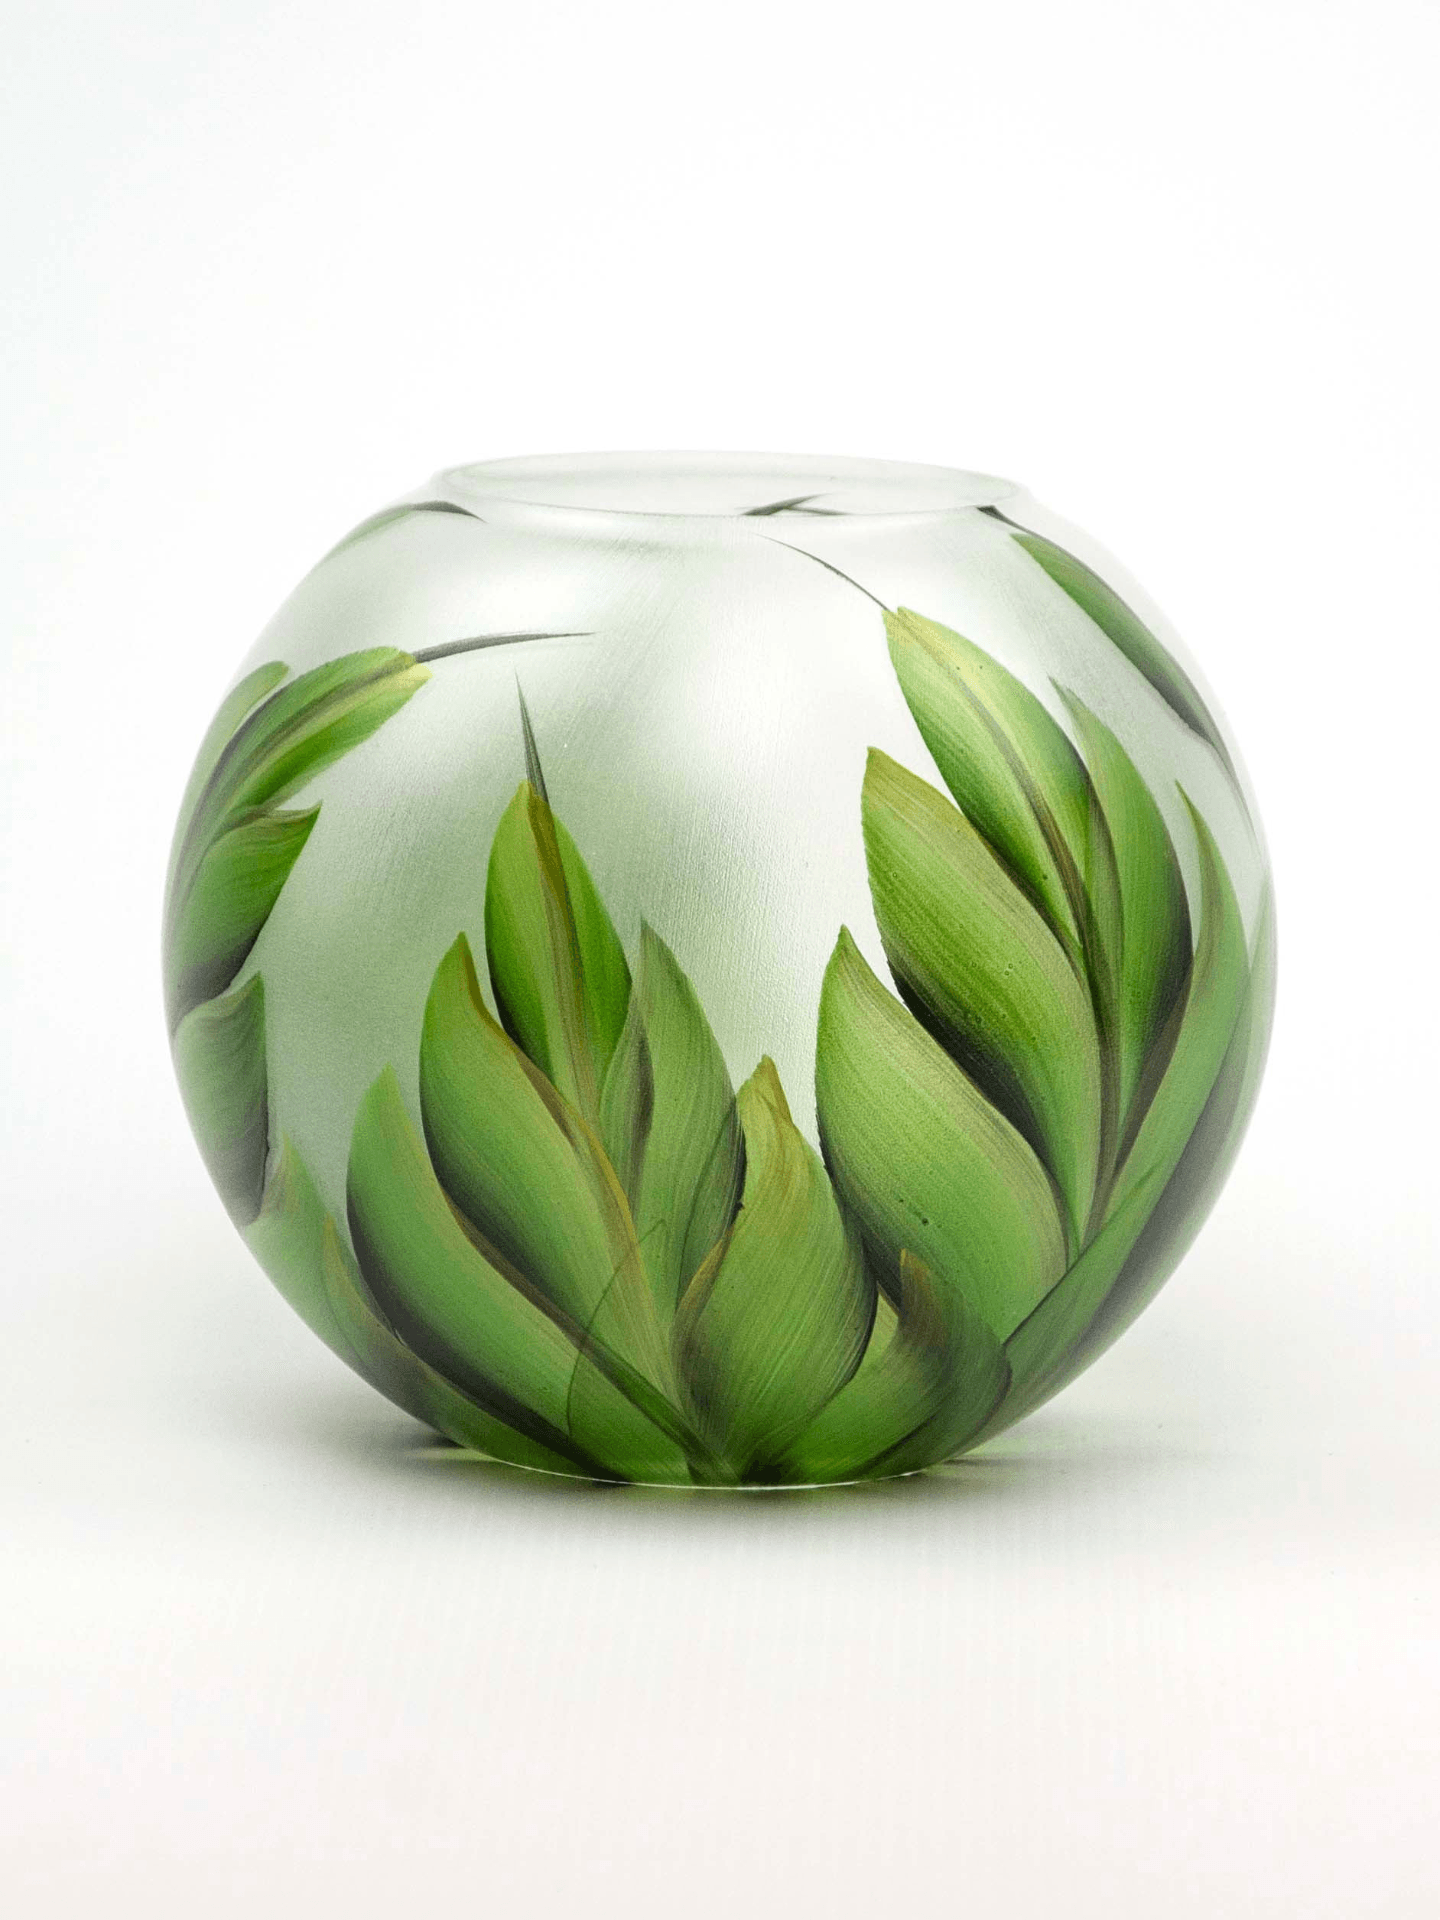 Handpainted Glass Vase for Flowers | Painted Art Glass Vase | Interior Design Home Room Decor Tropical | Table vase 6 inch | 5578/180/sh124.1  